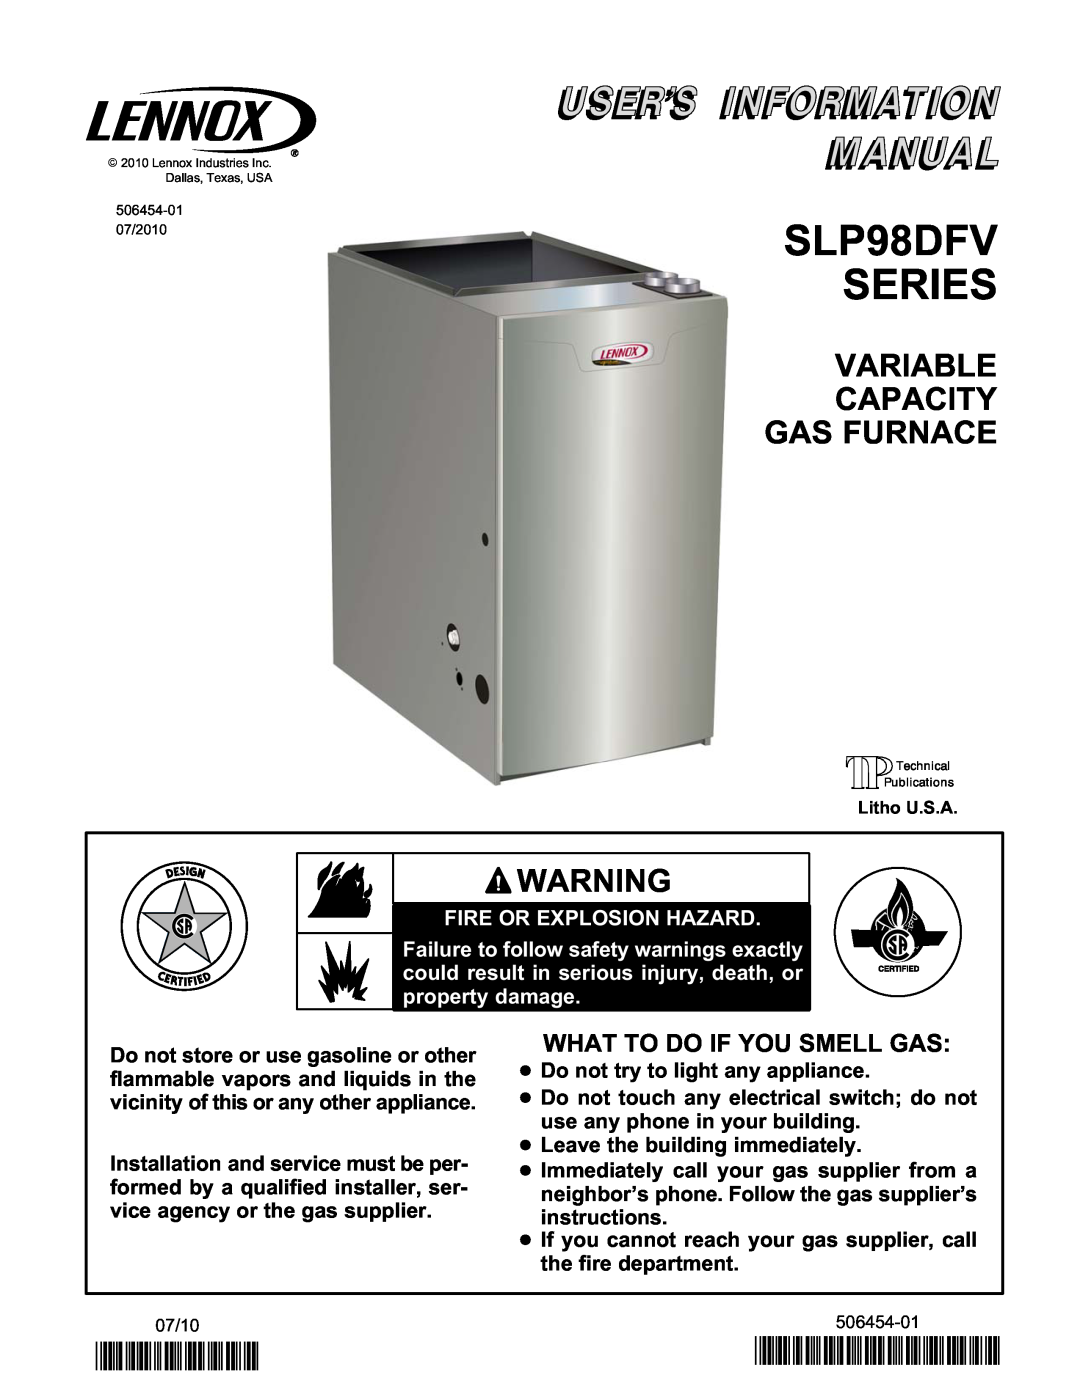 Lennox International Inc Variable Capacity Gas Furnace manual SLP98DFV SERIES, 2P0710, P506454-01 